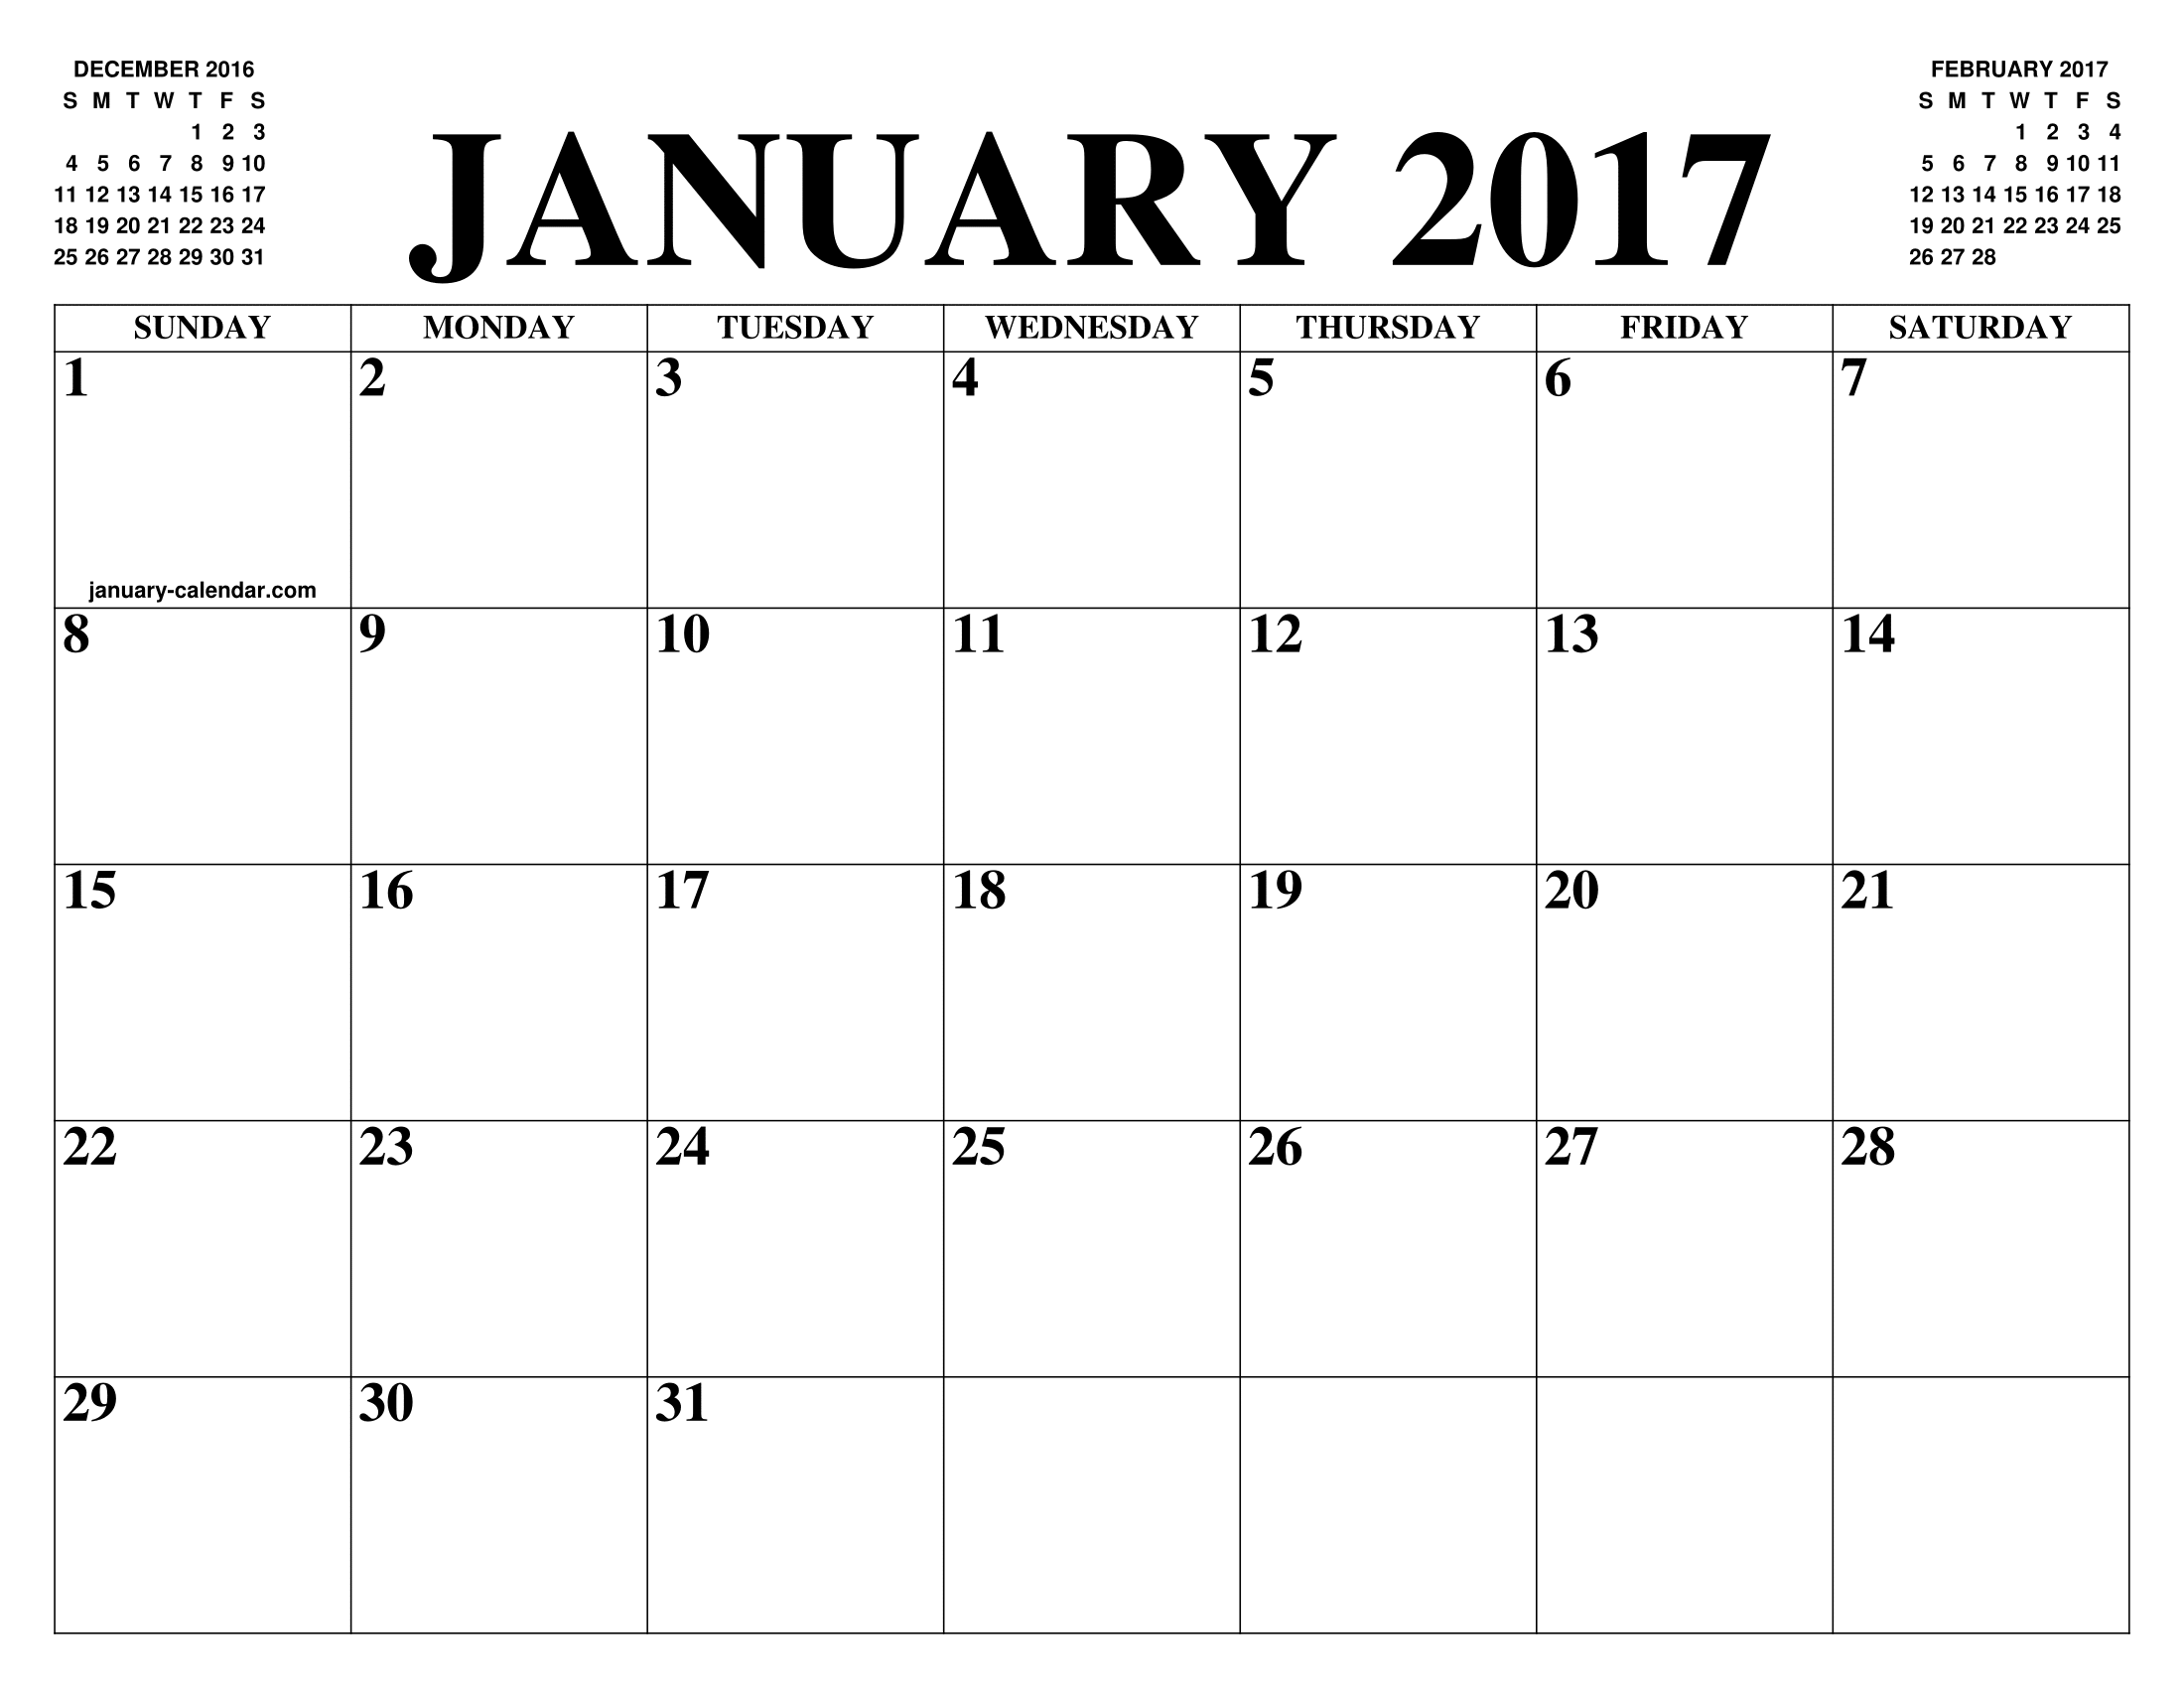 Vochtig Haas Investeren JANUARY 2017 CALENDAR OF THE MONTH: FREE PRINTABLE JANUARY CALENDAR OF THE  YEAR - AGENDA